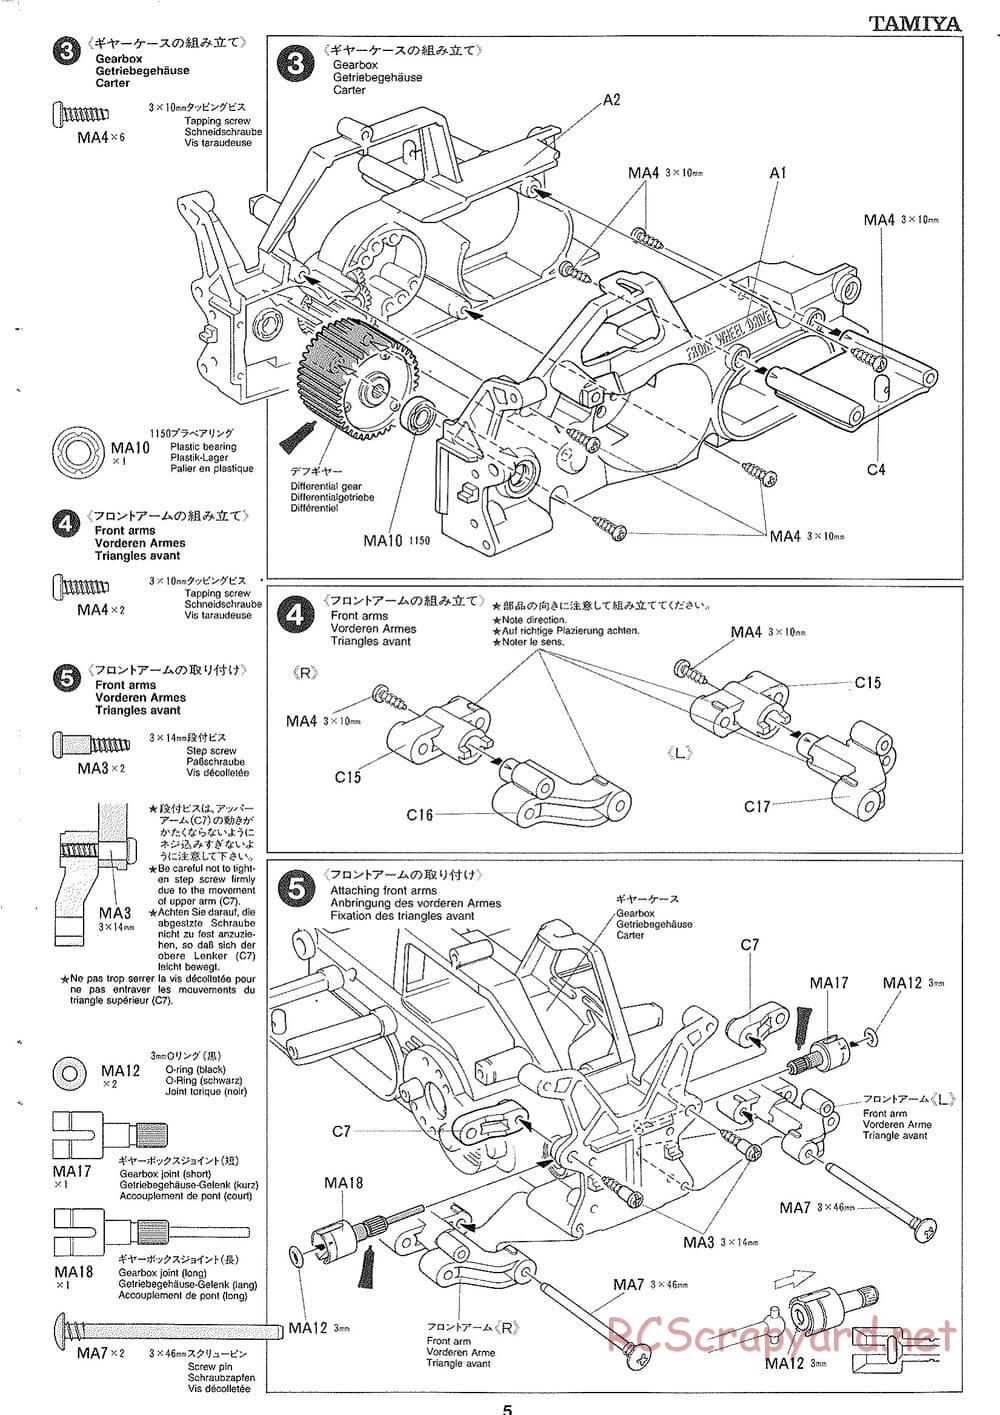 Tamiya - Rover Mini Cooper Racing - M03 Chassis - Manual - Page 5